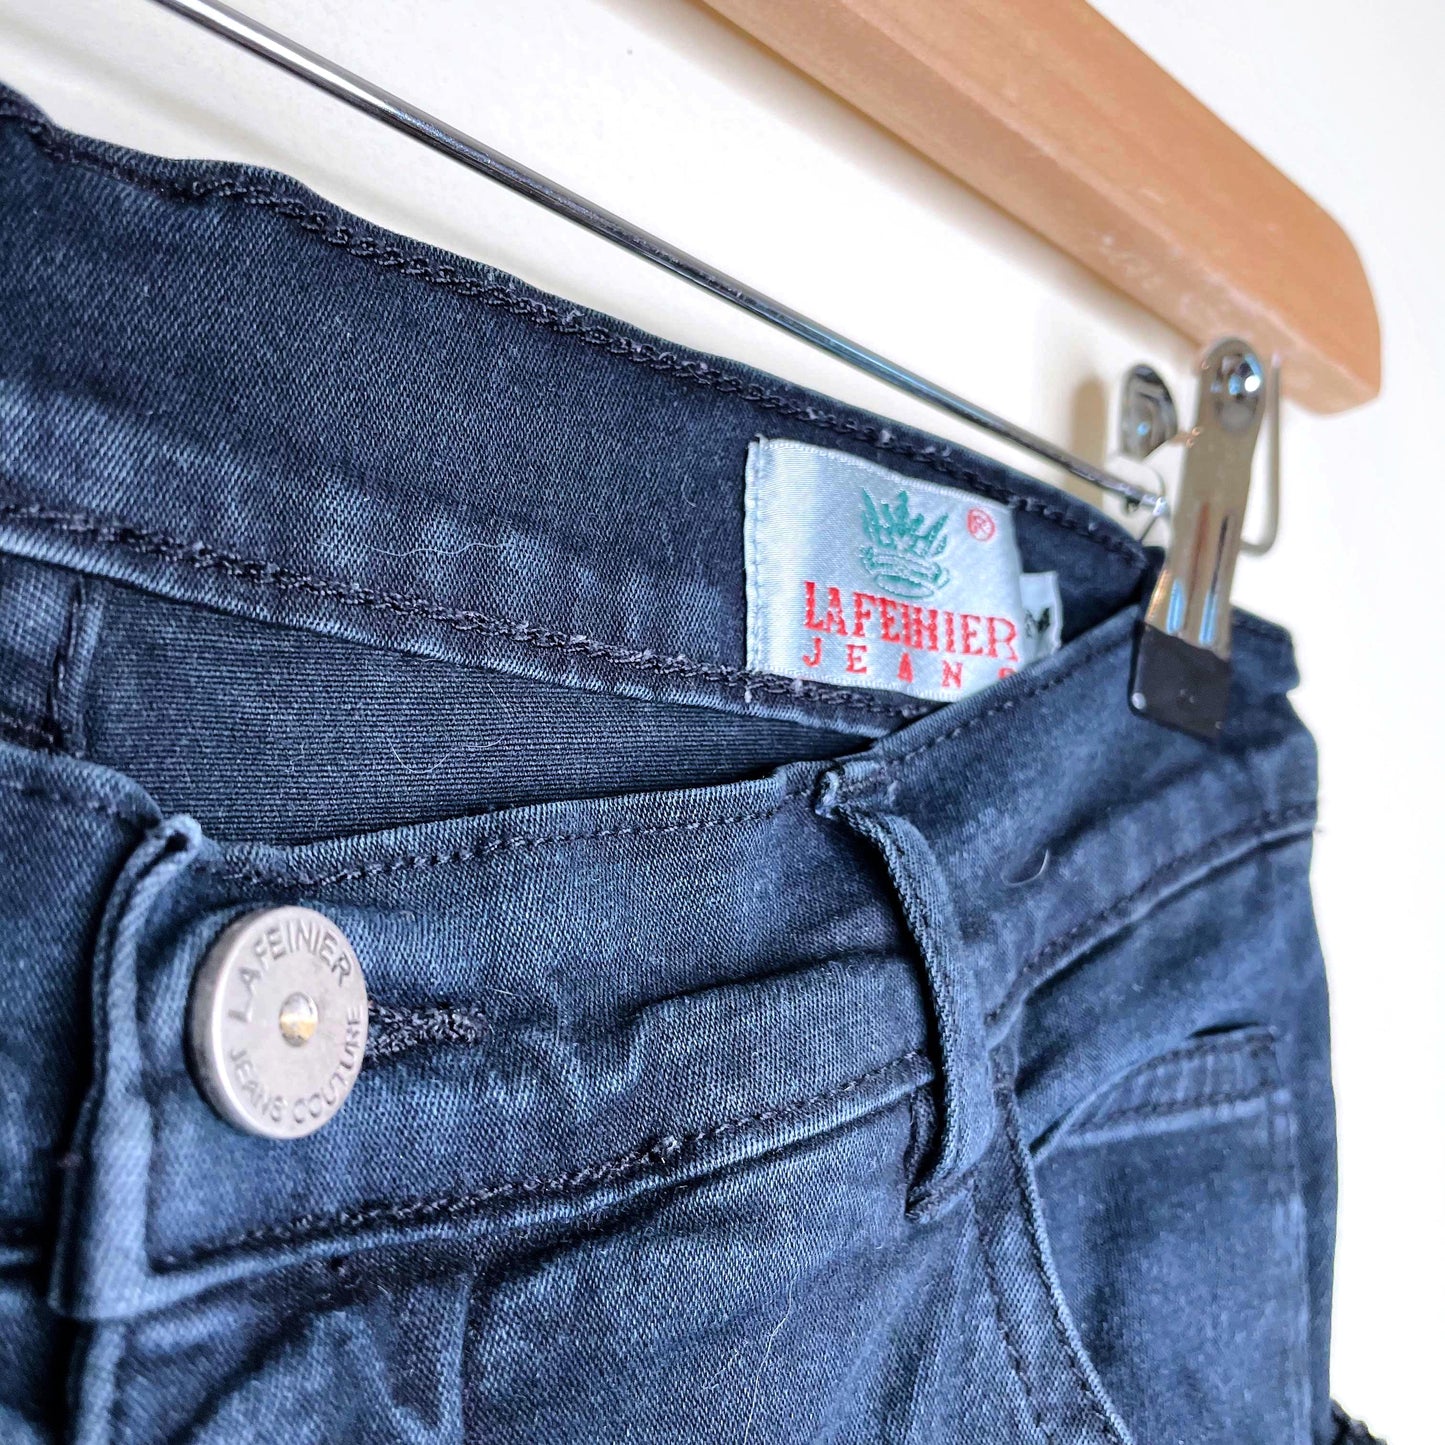 lafei nier high rise side panel skinny jeans - size medium